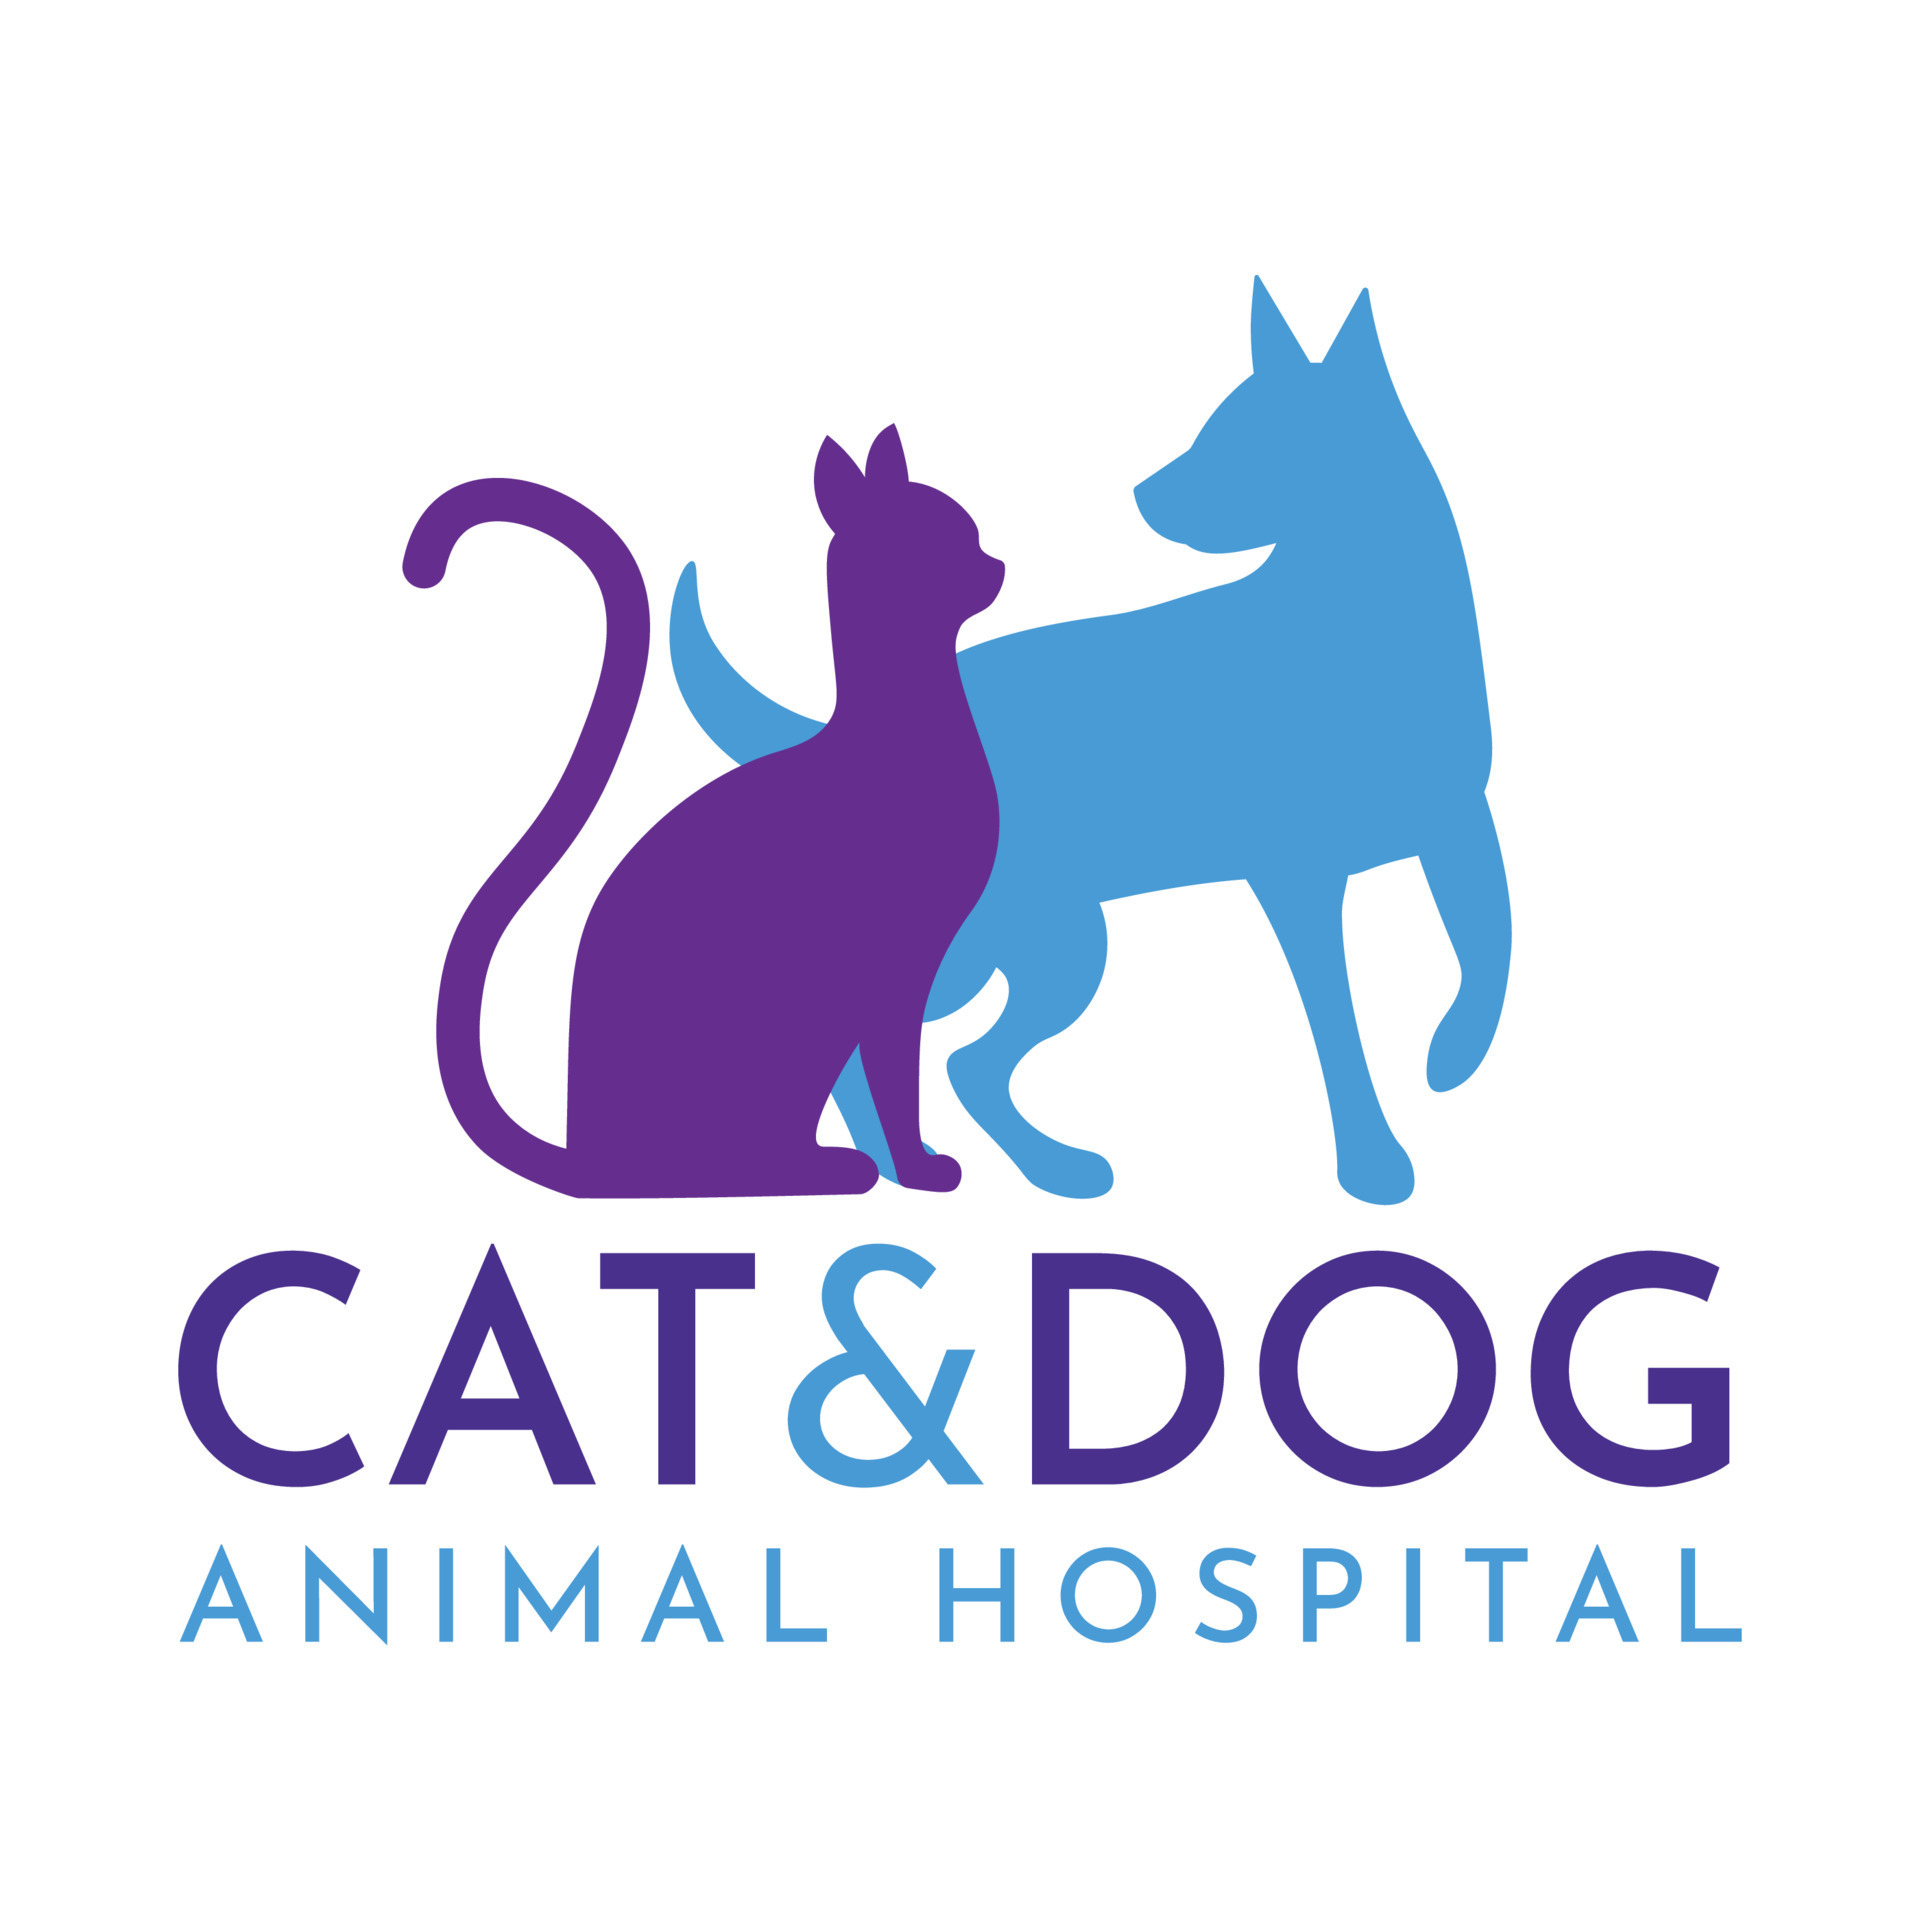 Cat and dog drawing, animal hospital logo 19162410 Vector Art at Vecteezy